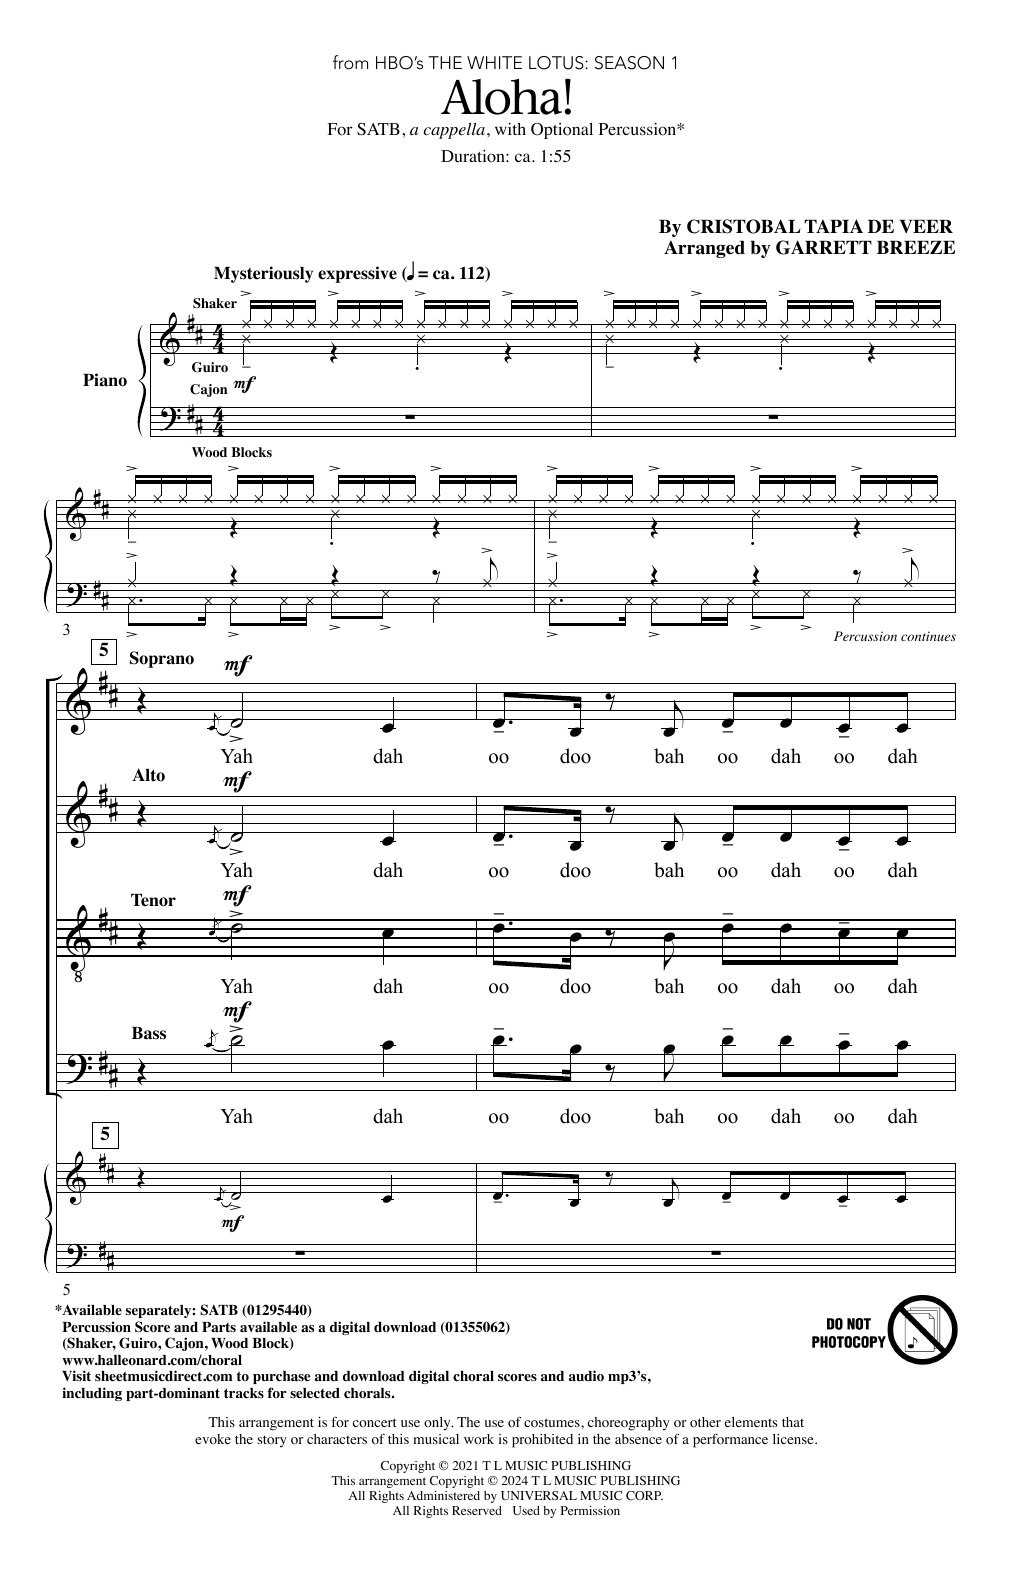 Cristobal Tapia de Veer Aloha! (arr. Garrett Breeze) Sheet Music Notes & Chords for SATB Choir - Download or Print PDF